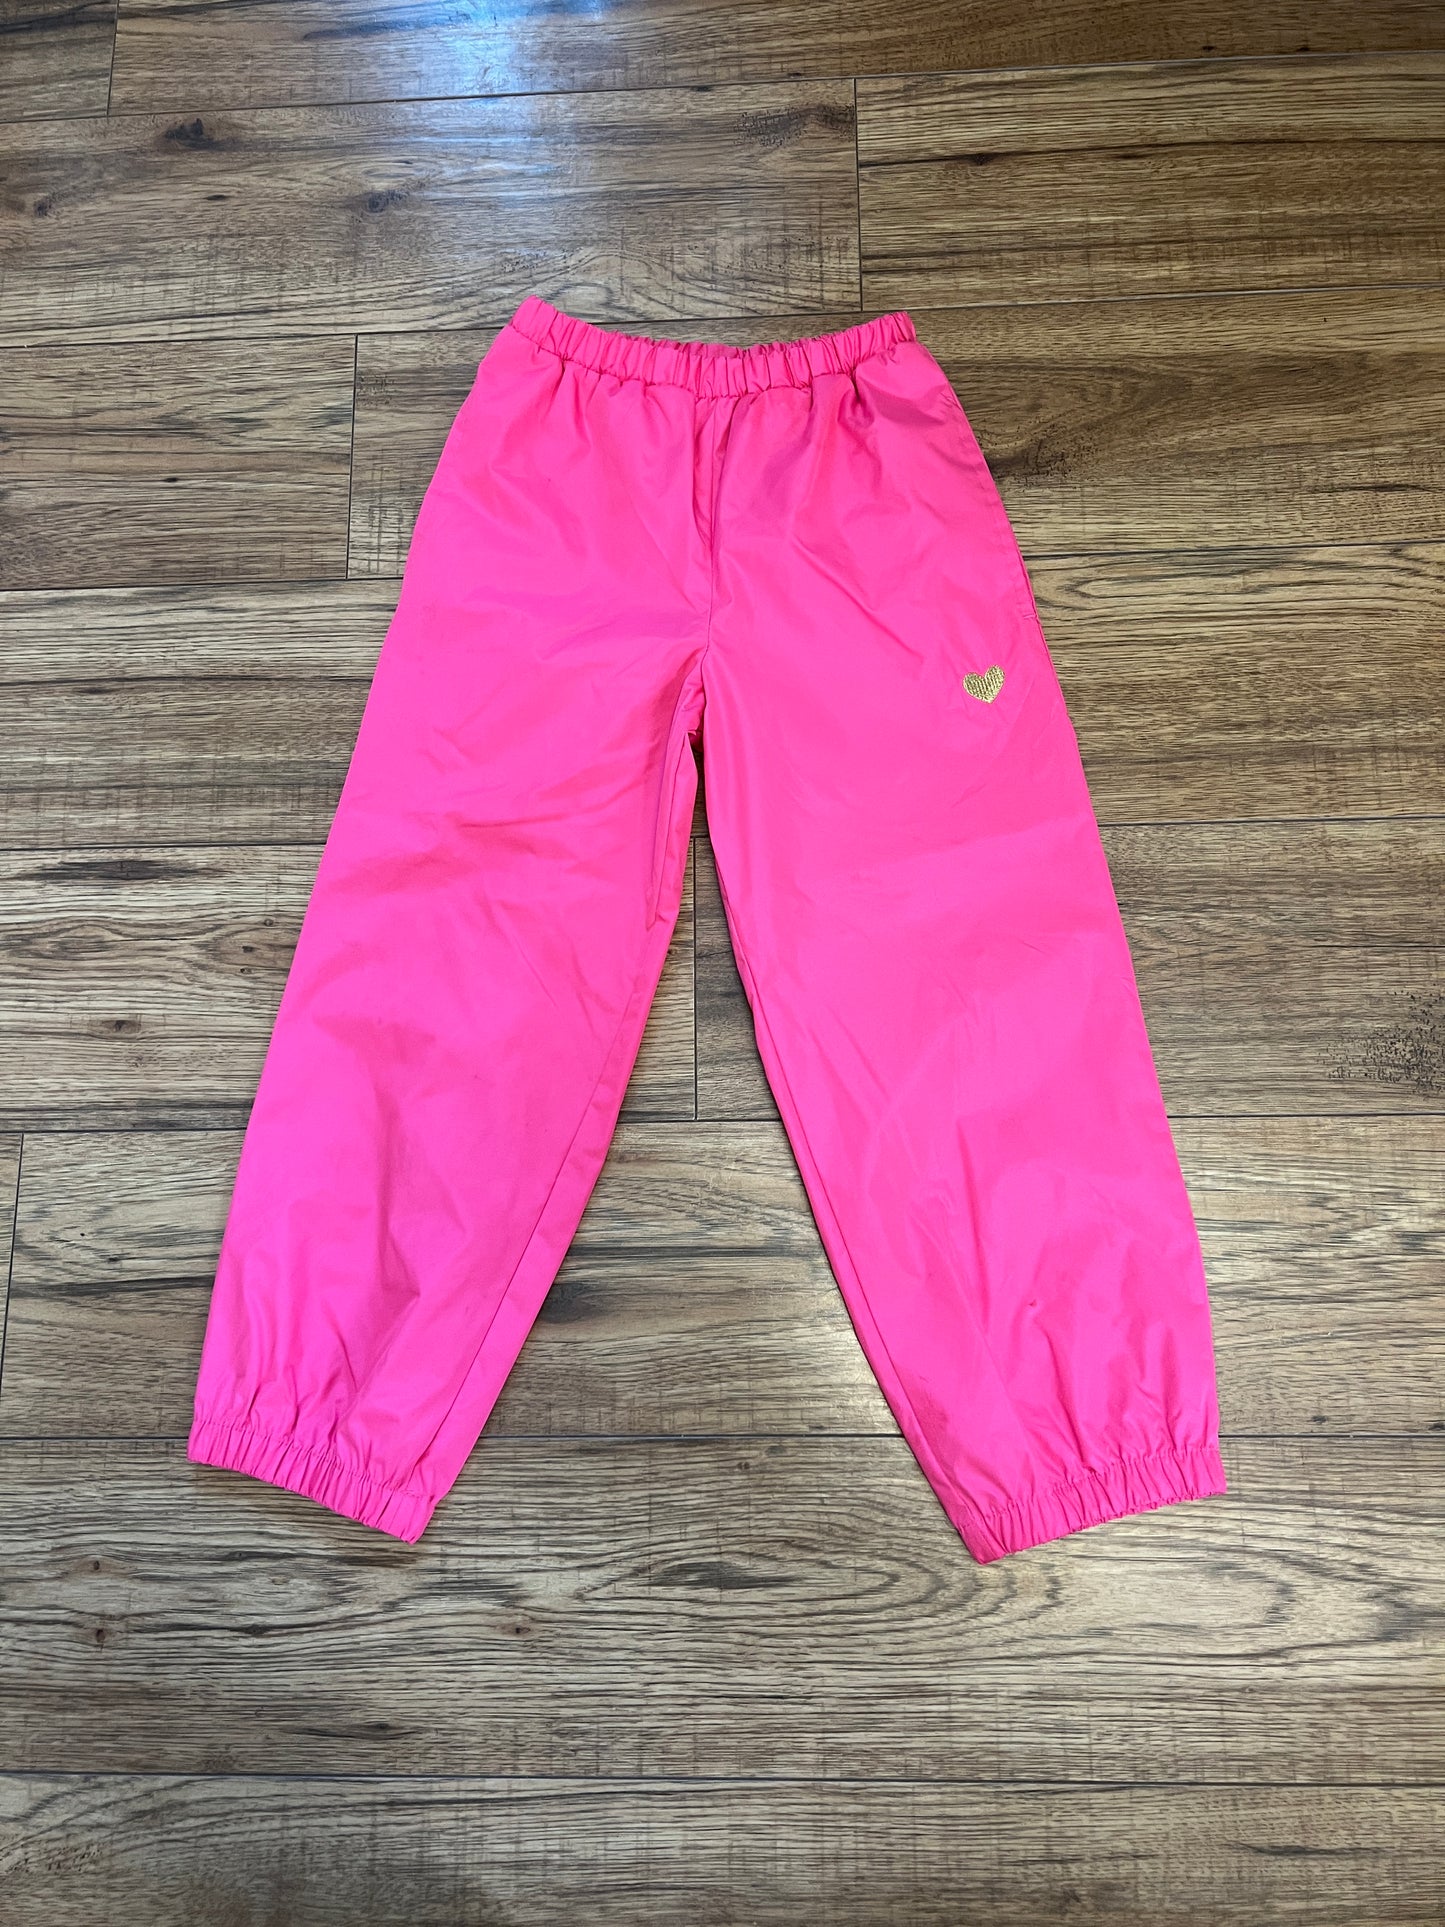 Rain Pants Child Size 4 Oshkosh Barbie Pink With Heart